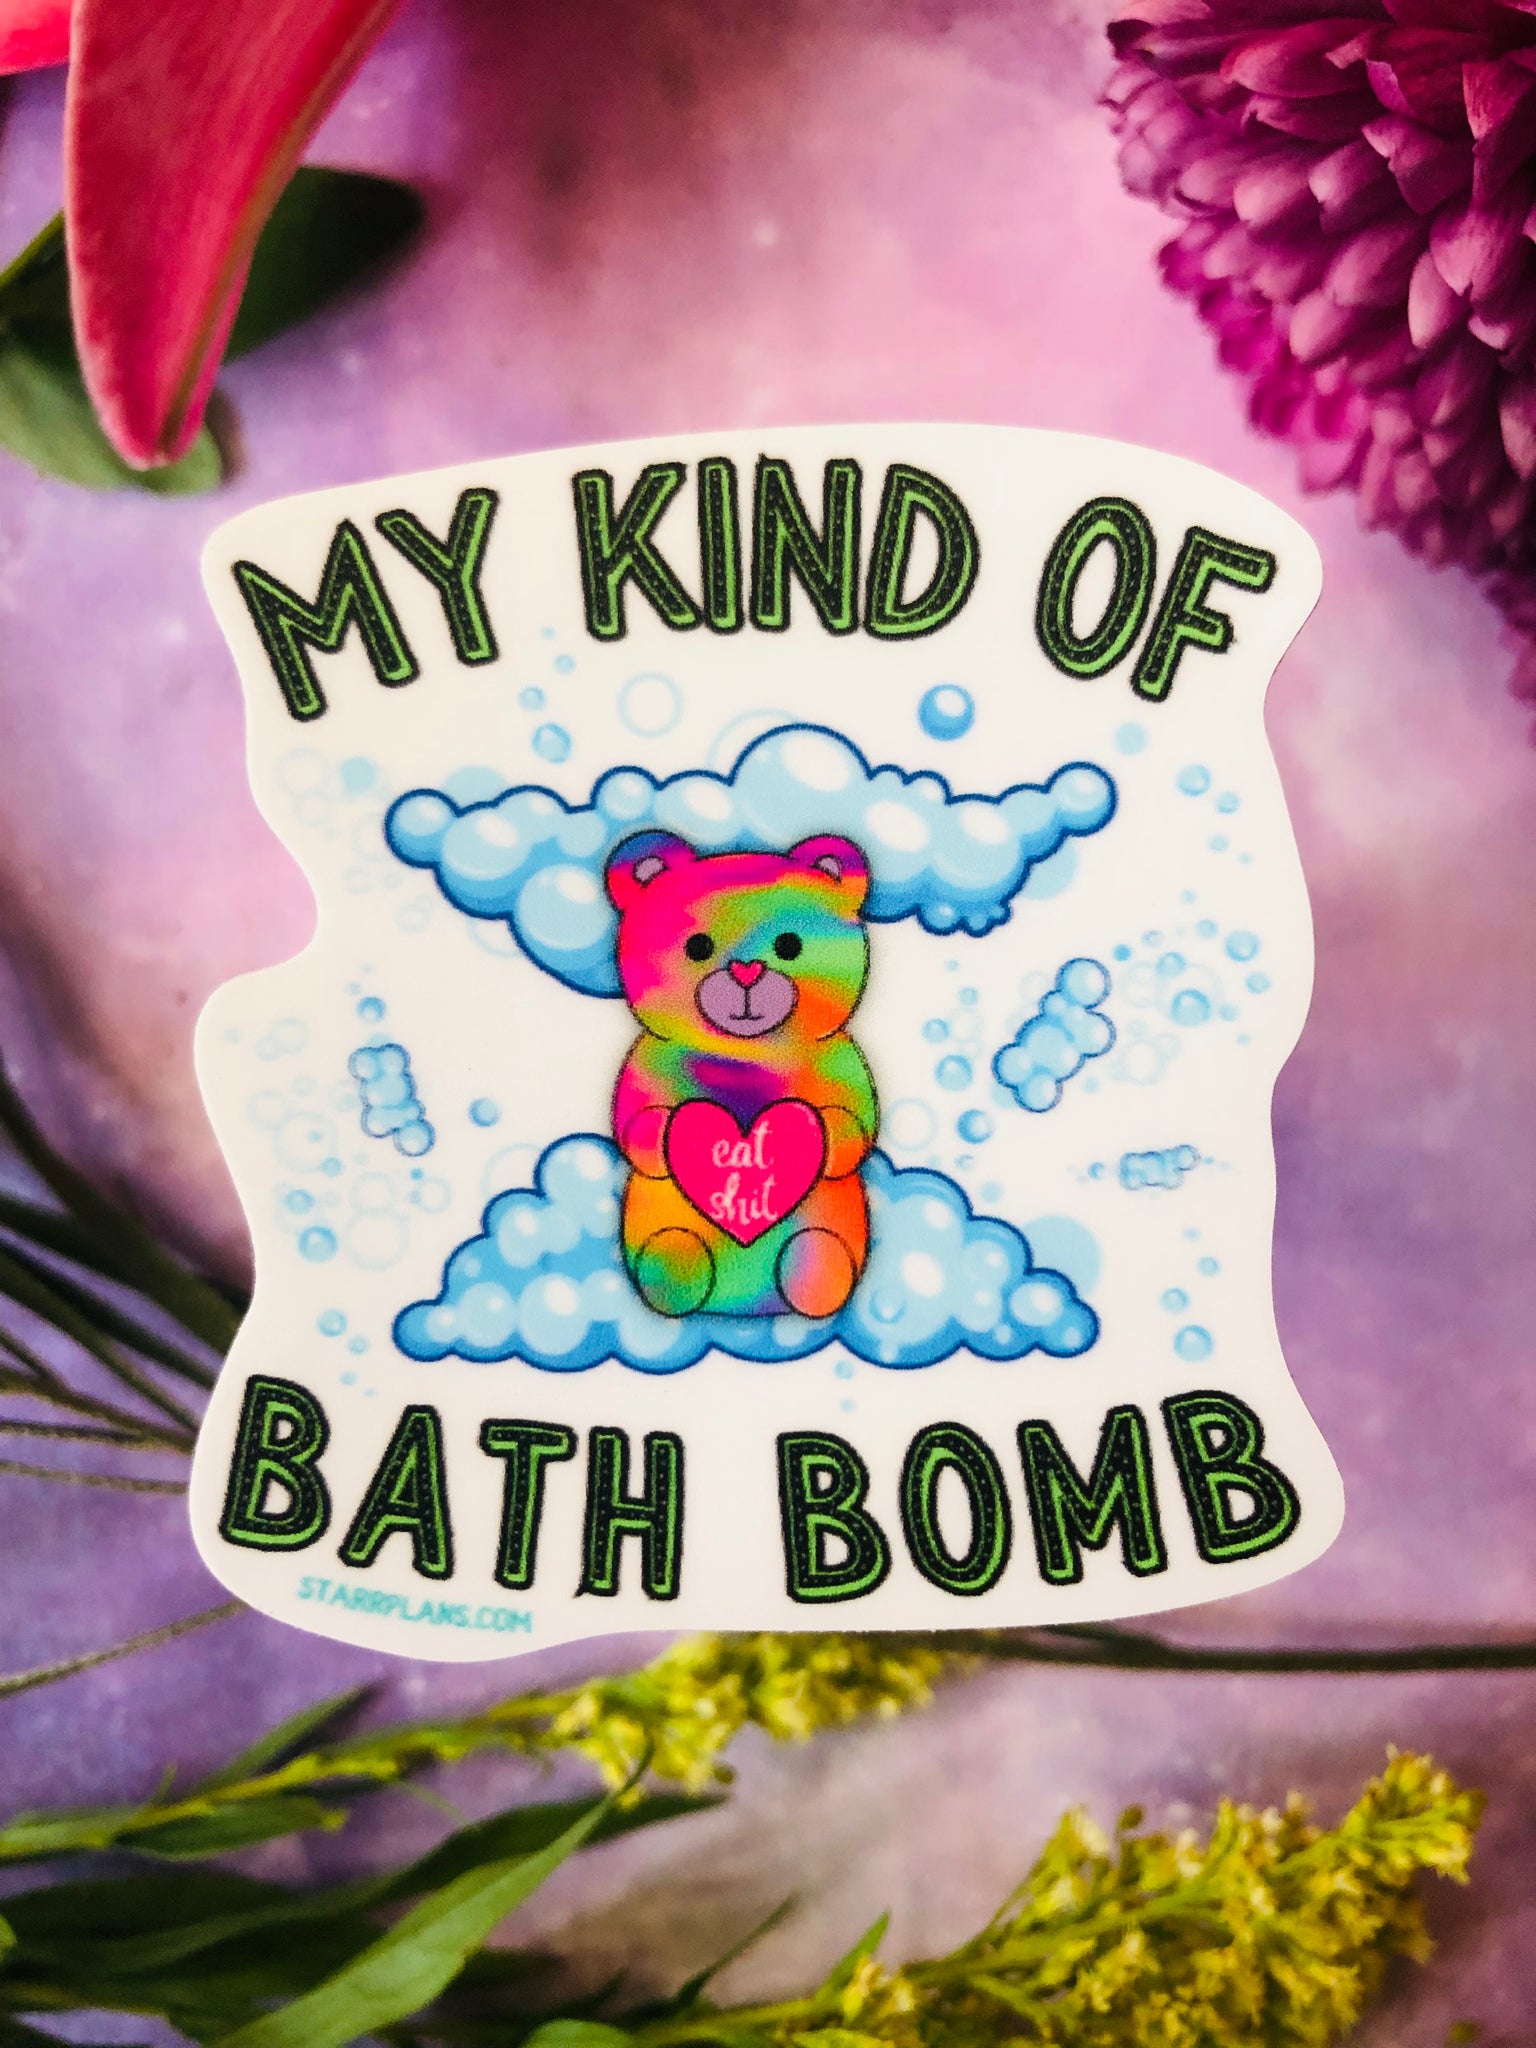 NEW- "My Kind of Bath Bomb" Snarky || Eat Sh1t || Vinyl Sticker || Starr Plans Exclusive